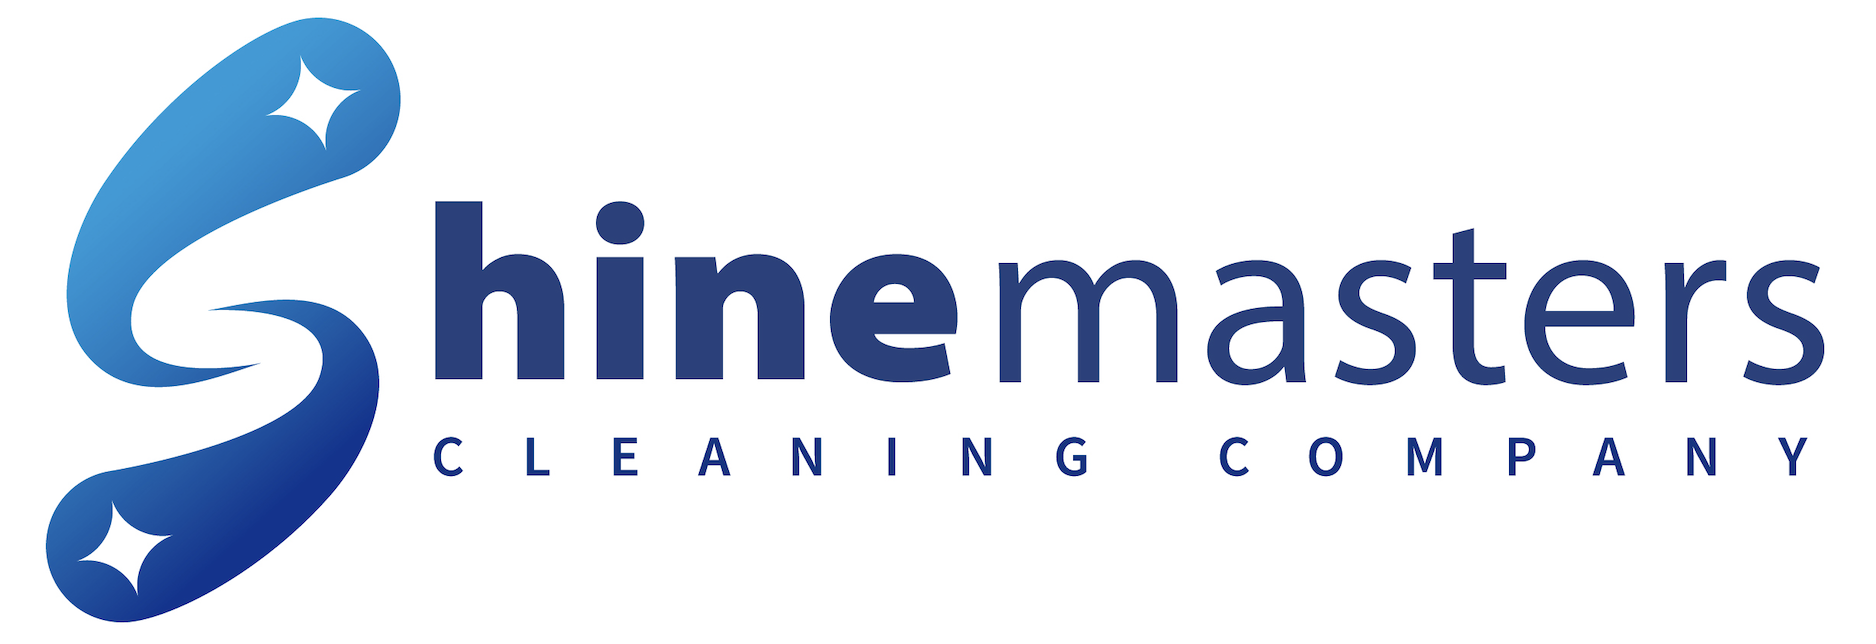 Shinemasters Cleaning Company Pty Ltd